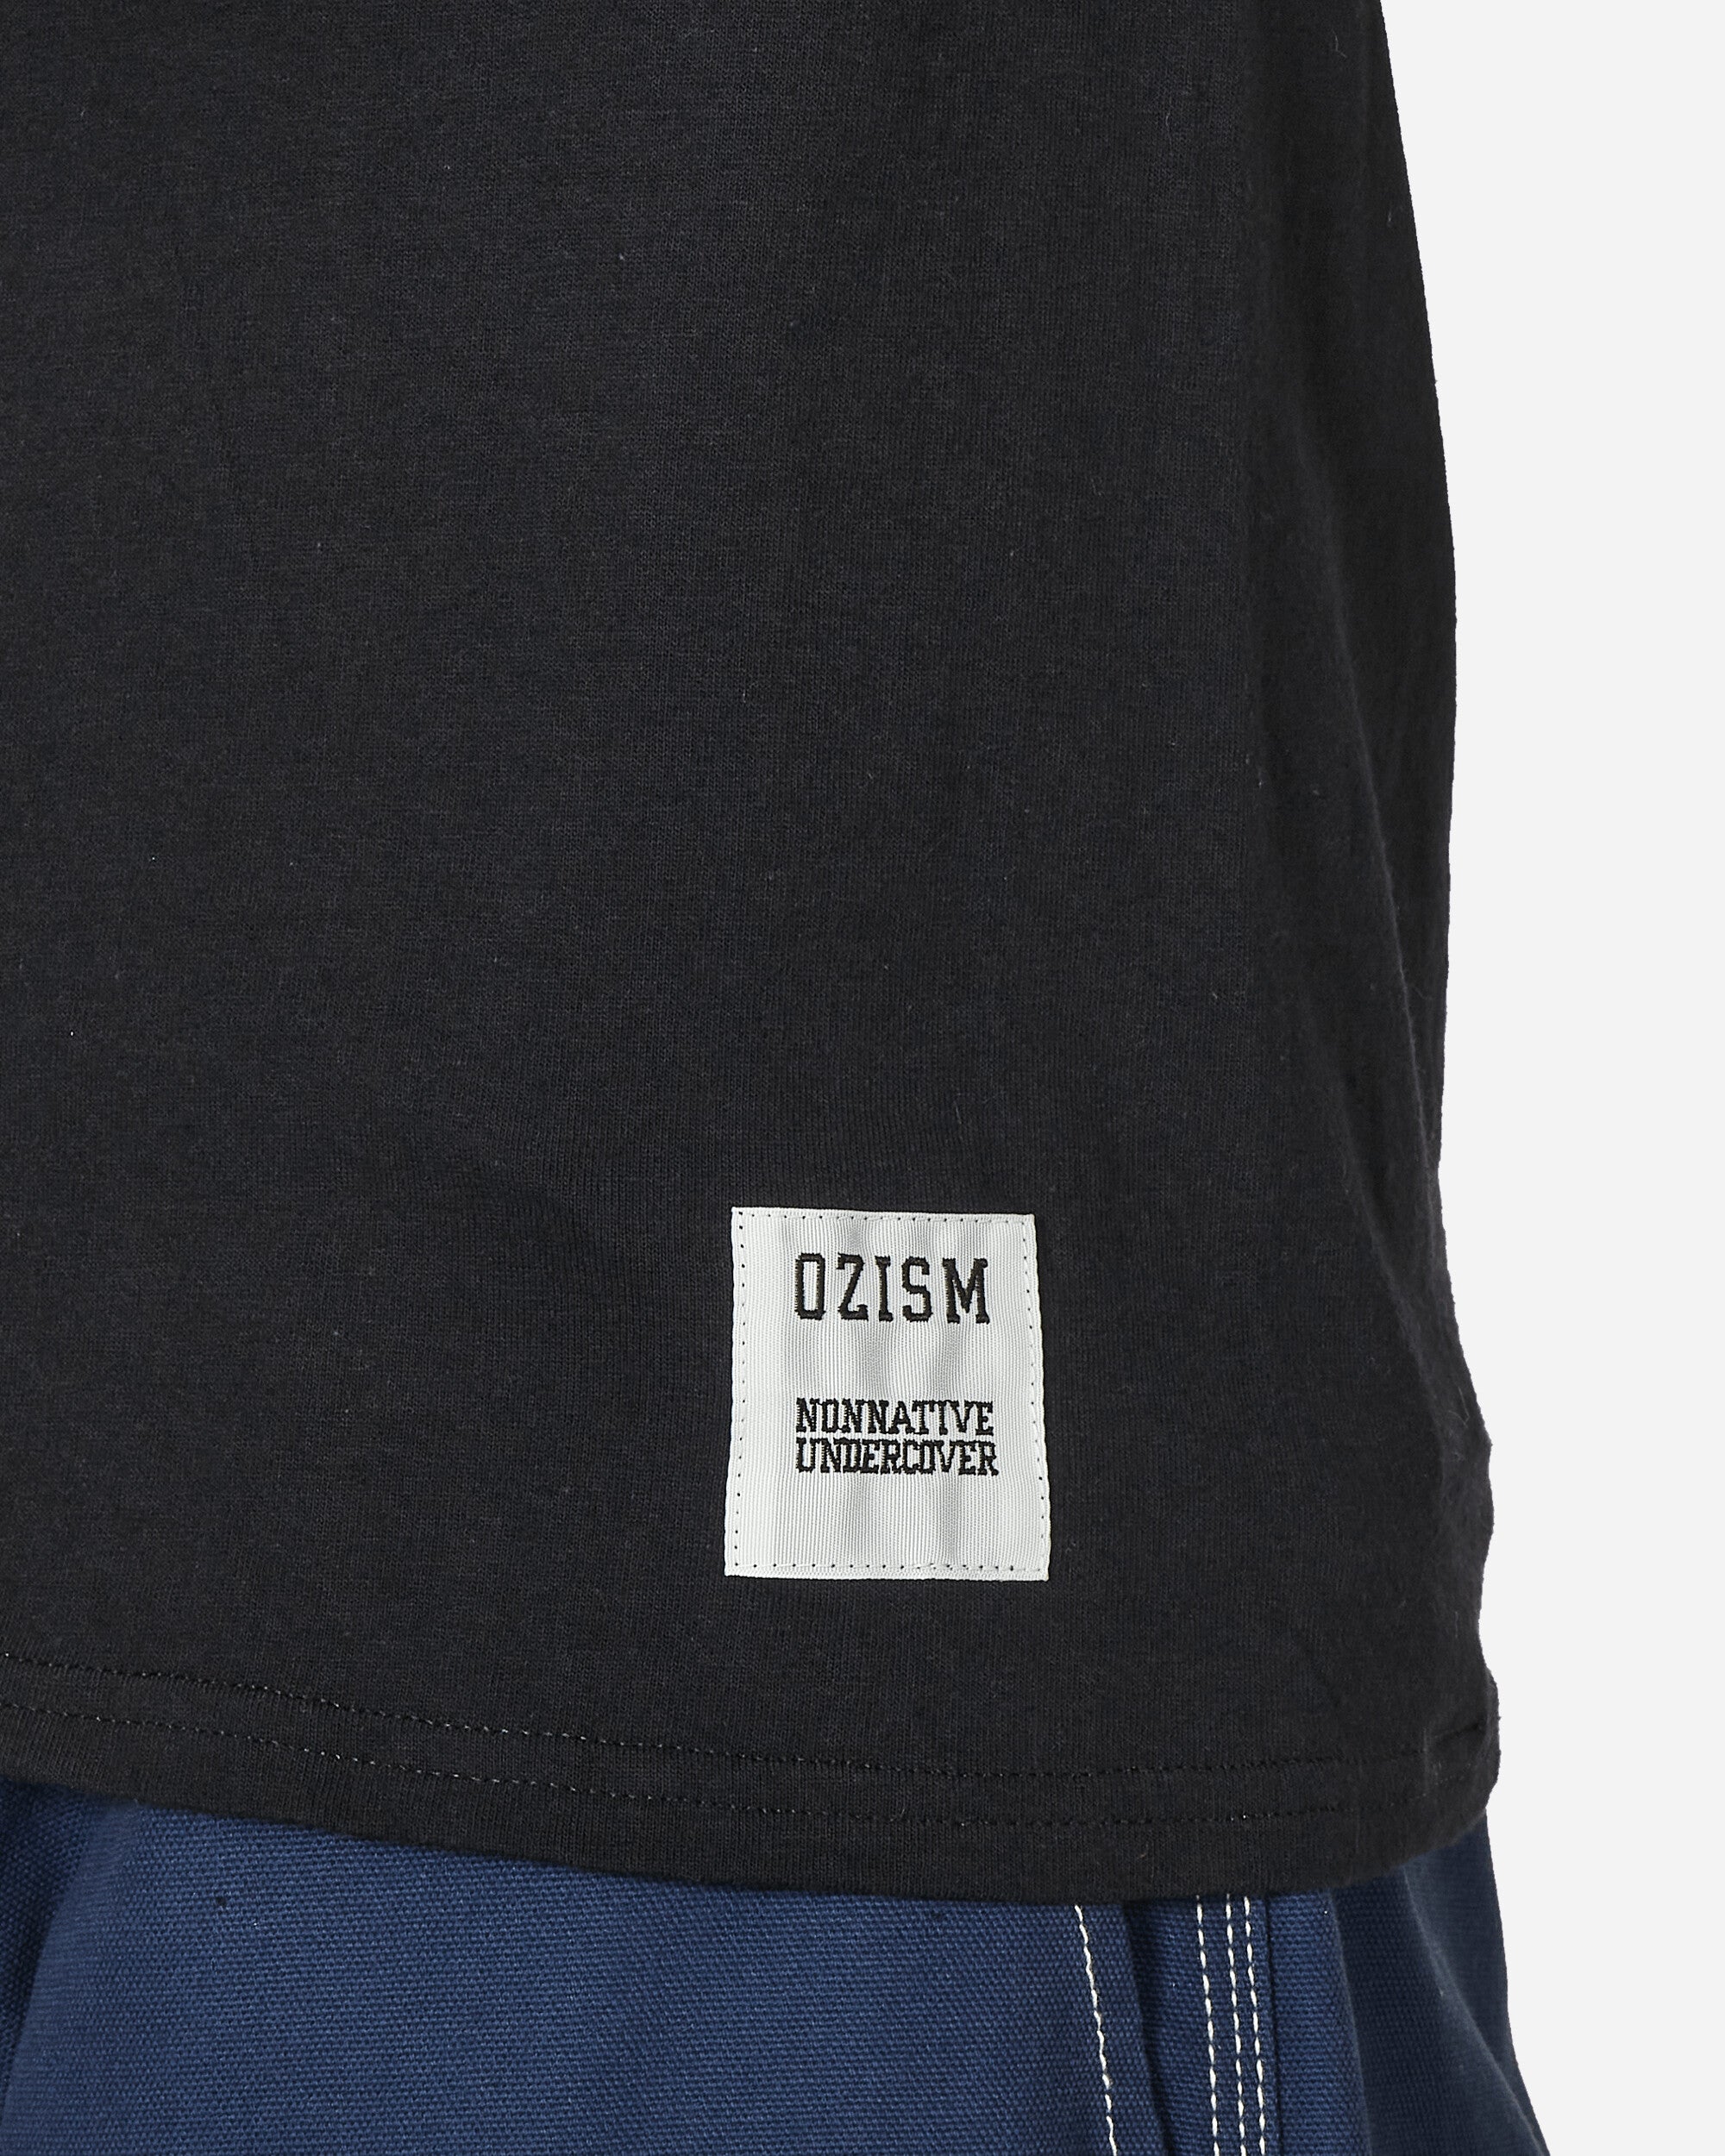 Undercover Ozism T-Shirt Black T-Shirts Shortsleeve UC1D9808-1 1